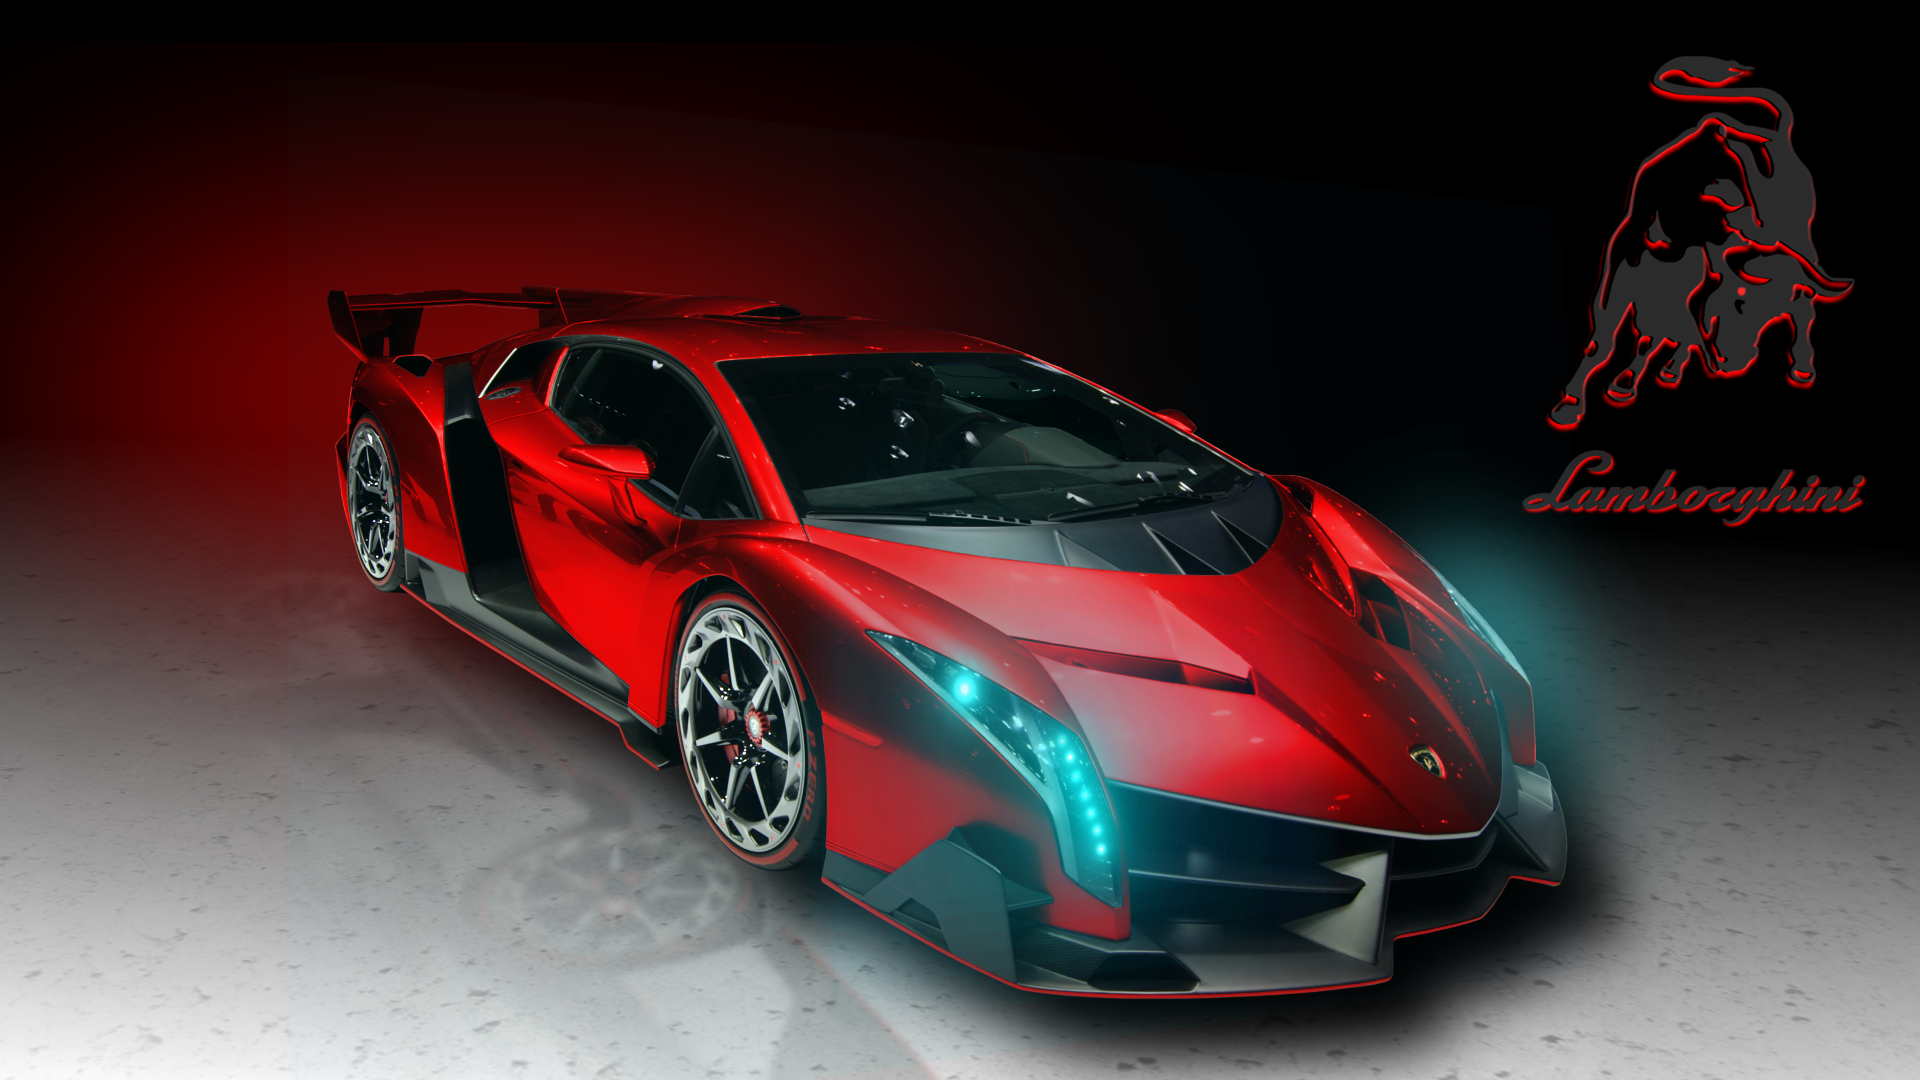 Lamborghini Veneno Red Art Exclusive HD Wallpapers 4116